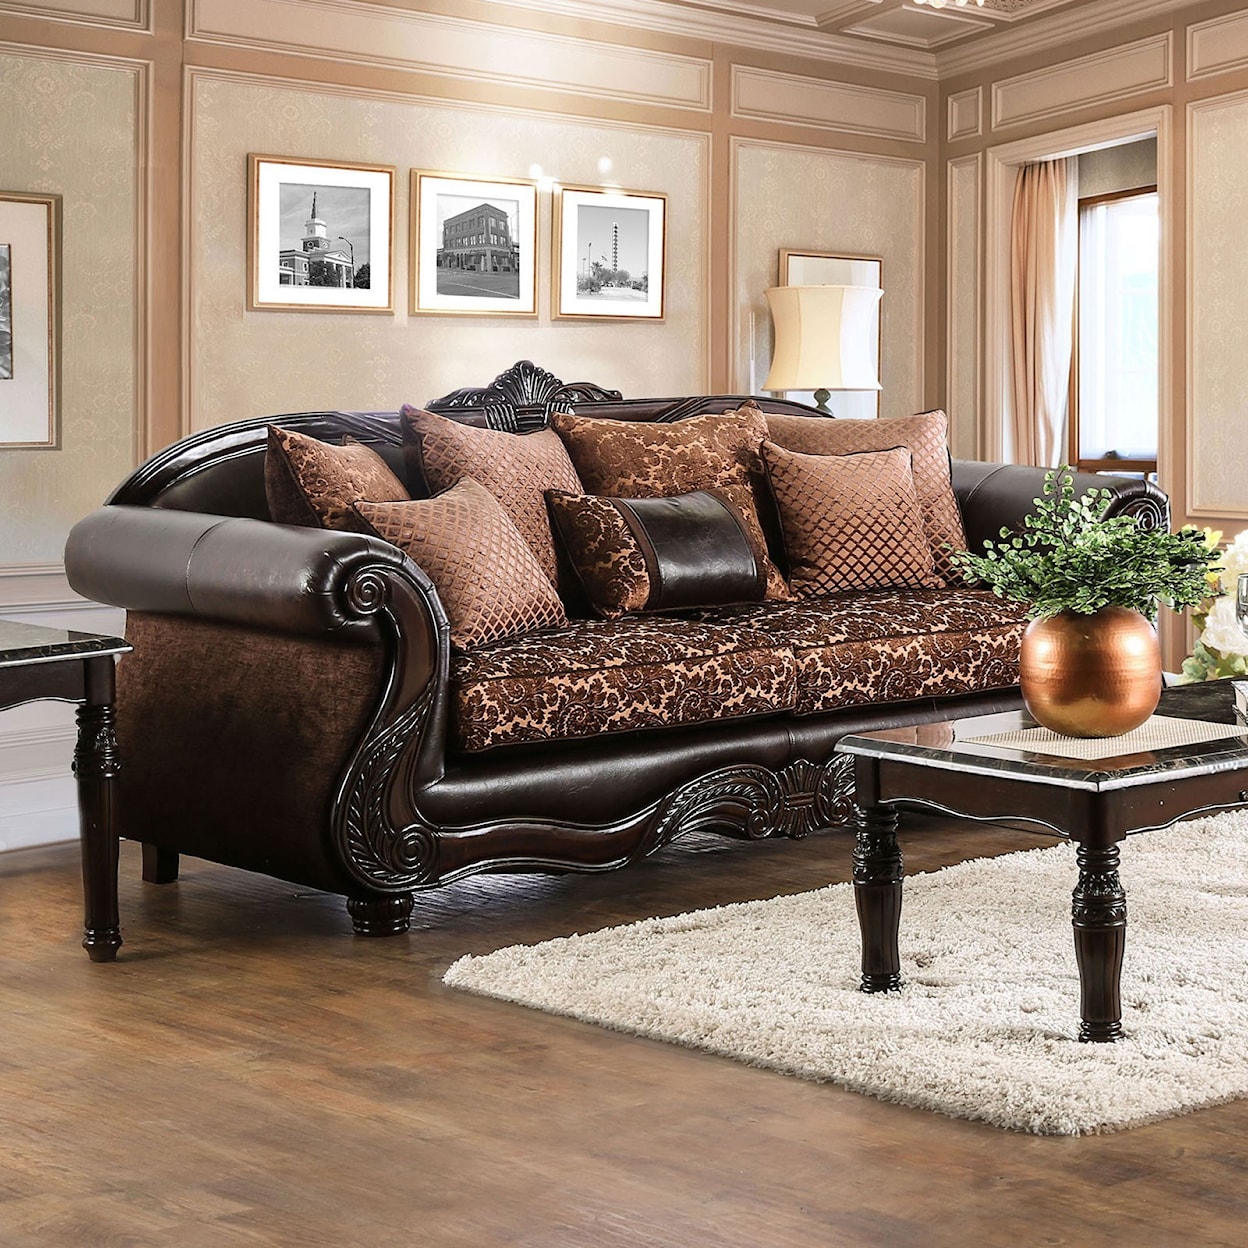 Furniture of America Elpis Sofa